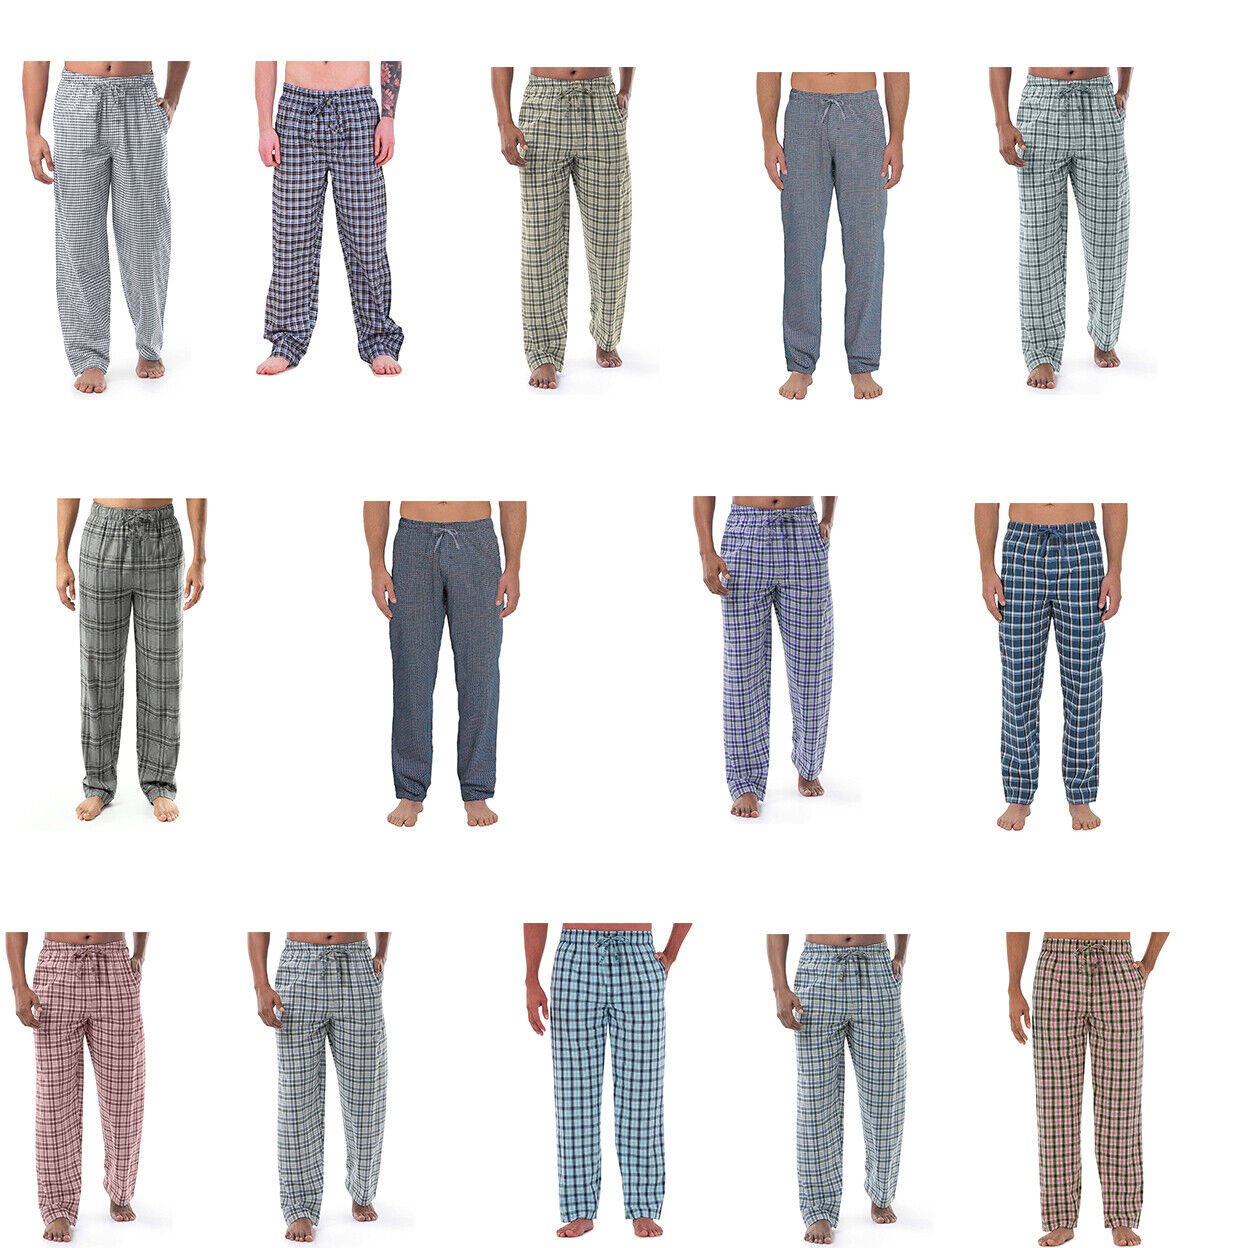 5-Pack: Men's Ultra-Soft Plaid Cotton Jersey Knit Comfy Sleep Lounge Pajama Pants - Large